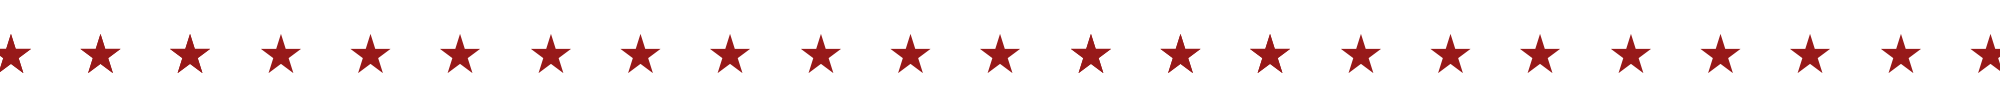 red star bar